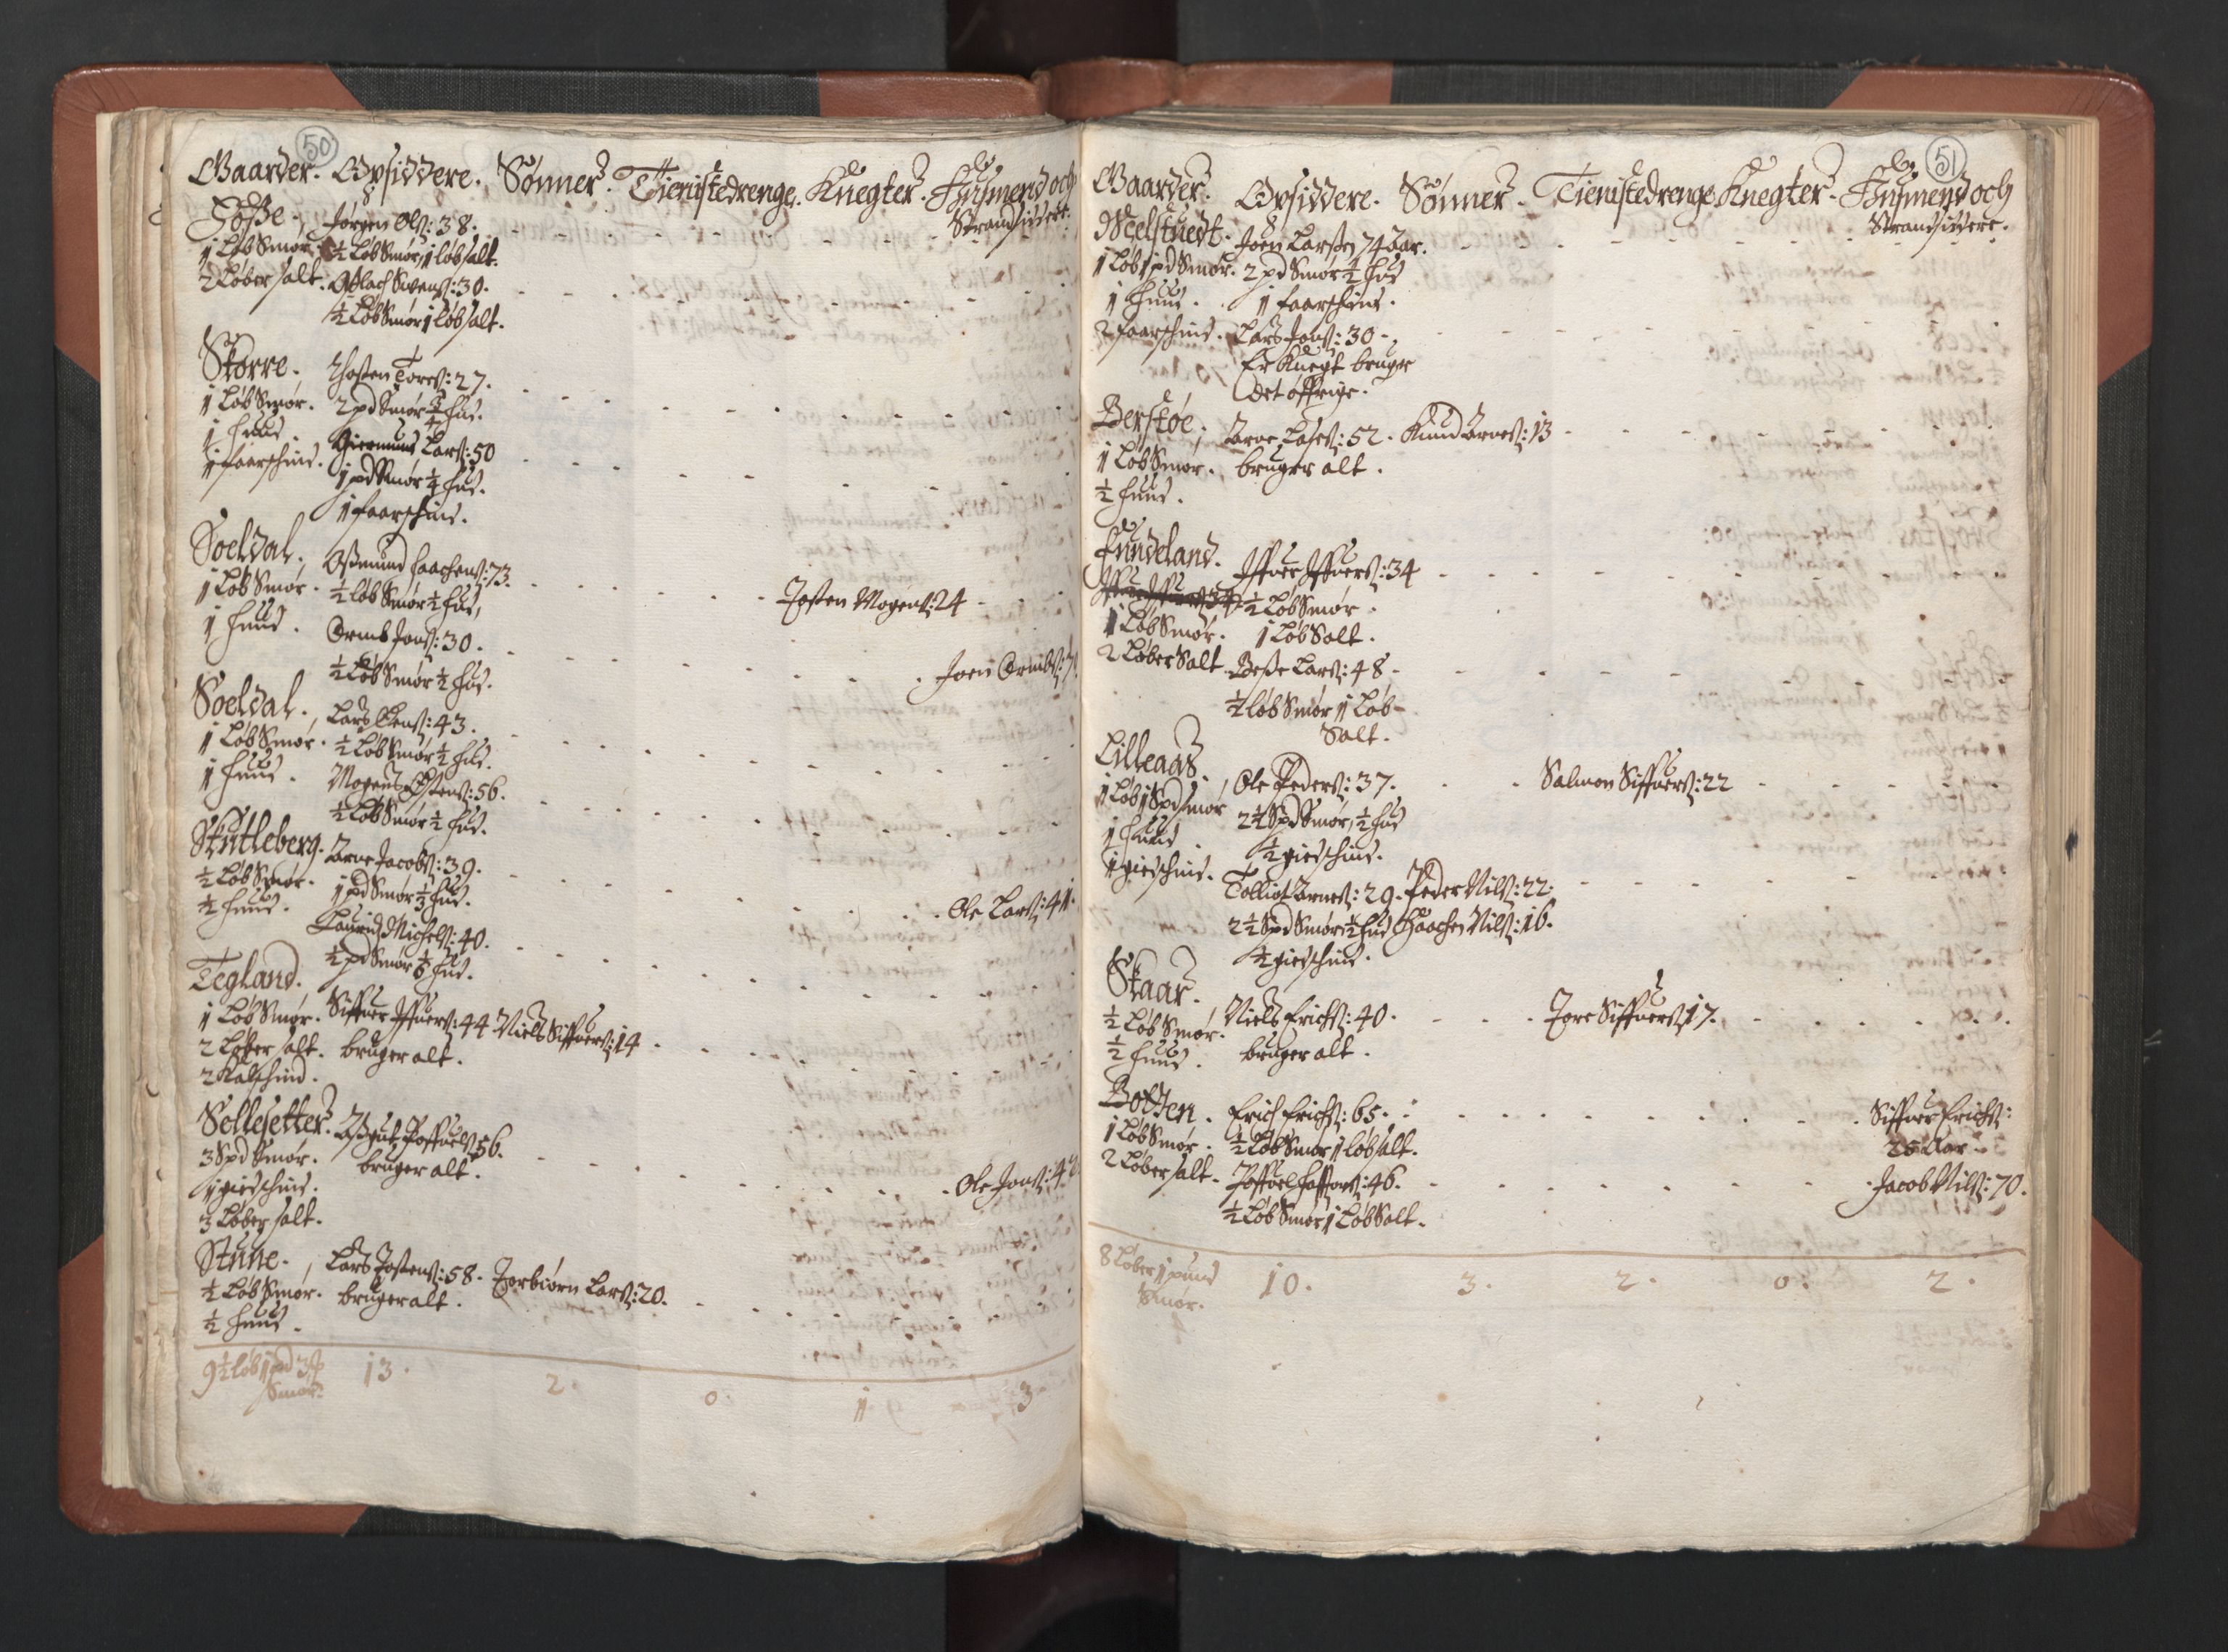 RA, Fogdenes og sorenskrivernes manntall 1664-1666, nr. 14: Hardanger len, Ytre Sogn fogderi og Indre Sogn fogderi, 1664-1665, s. 50-51